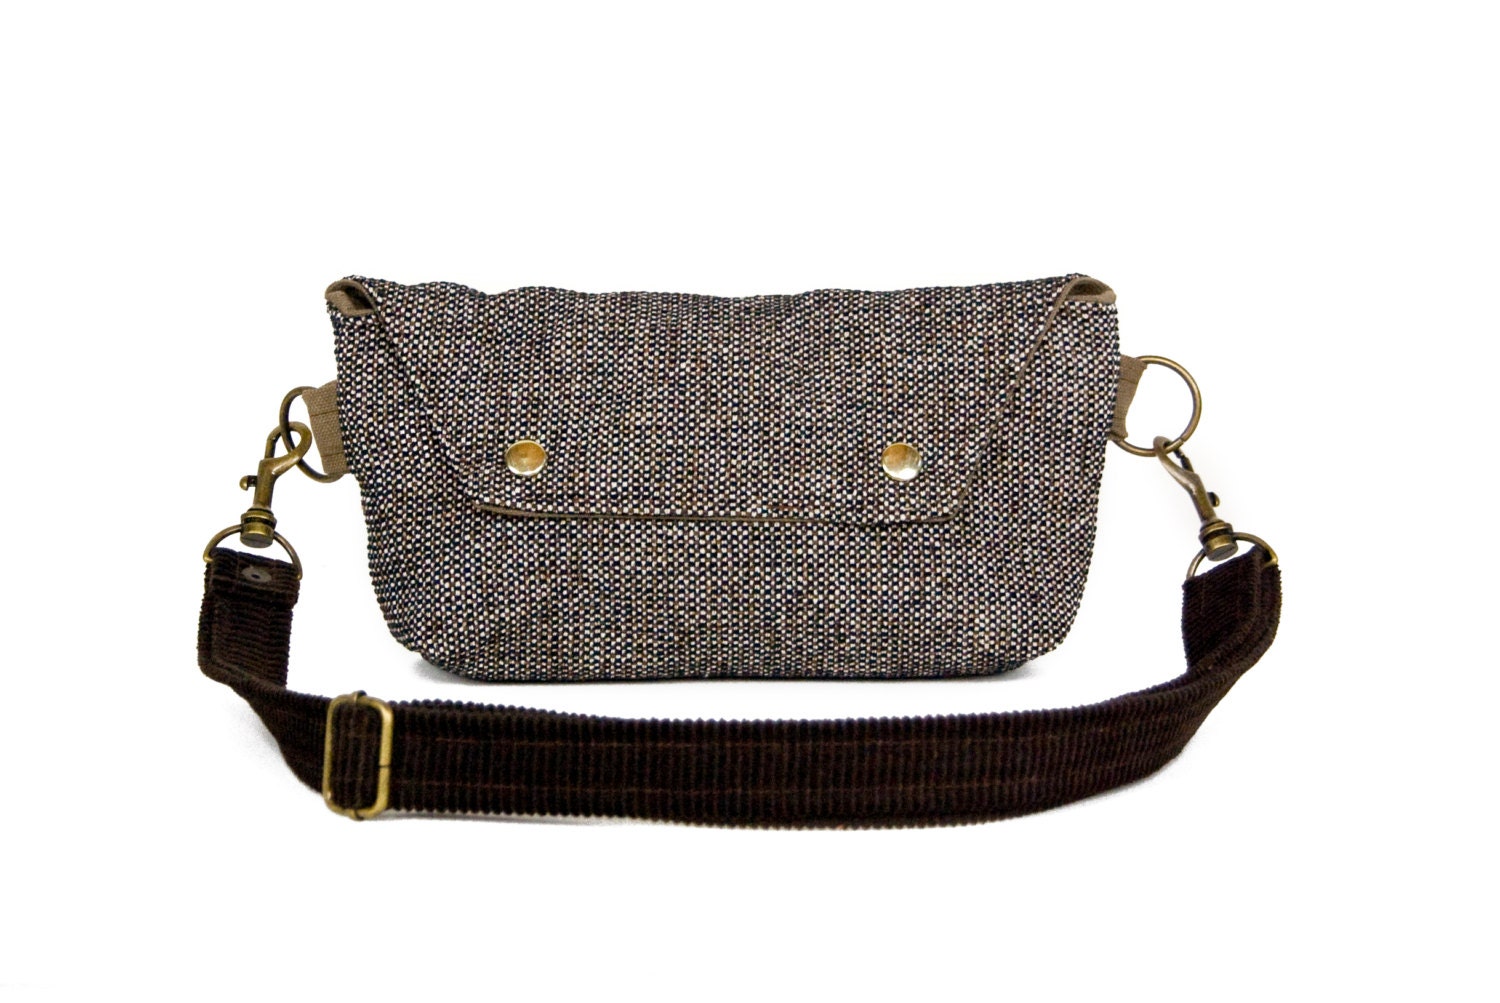 Hip Bag - Fanny Pack - Traveler Bag in Brown Beige Black Tweed and Corduroy - Made to Order